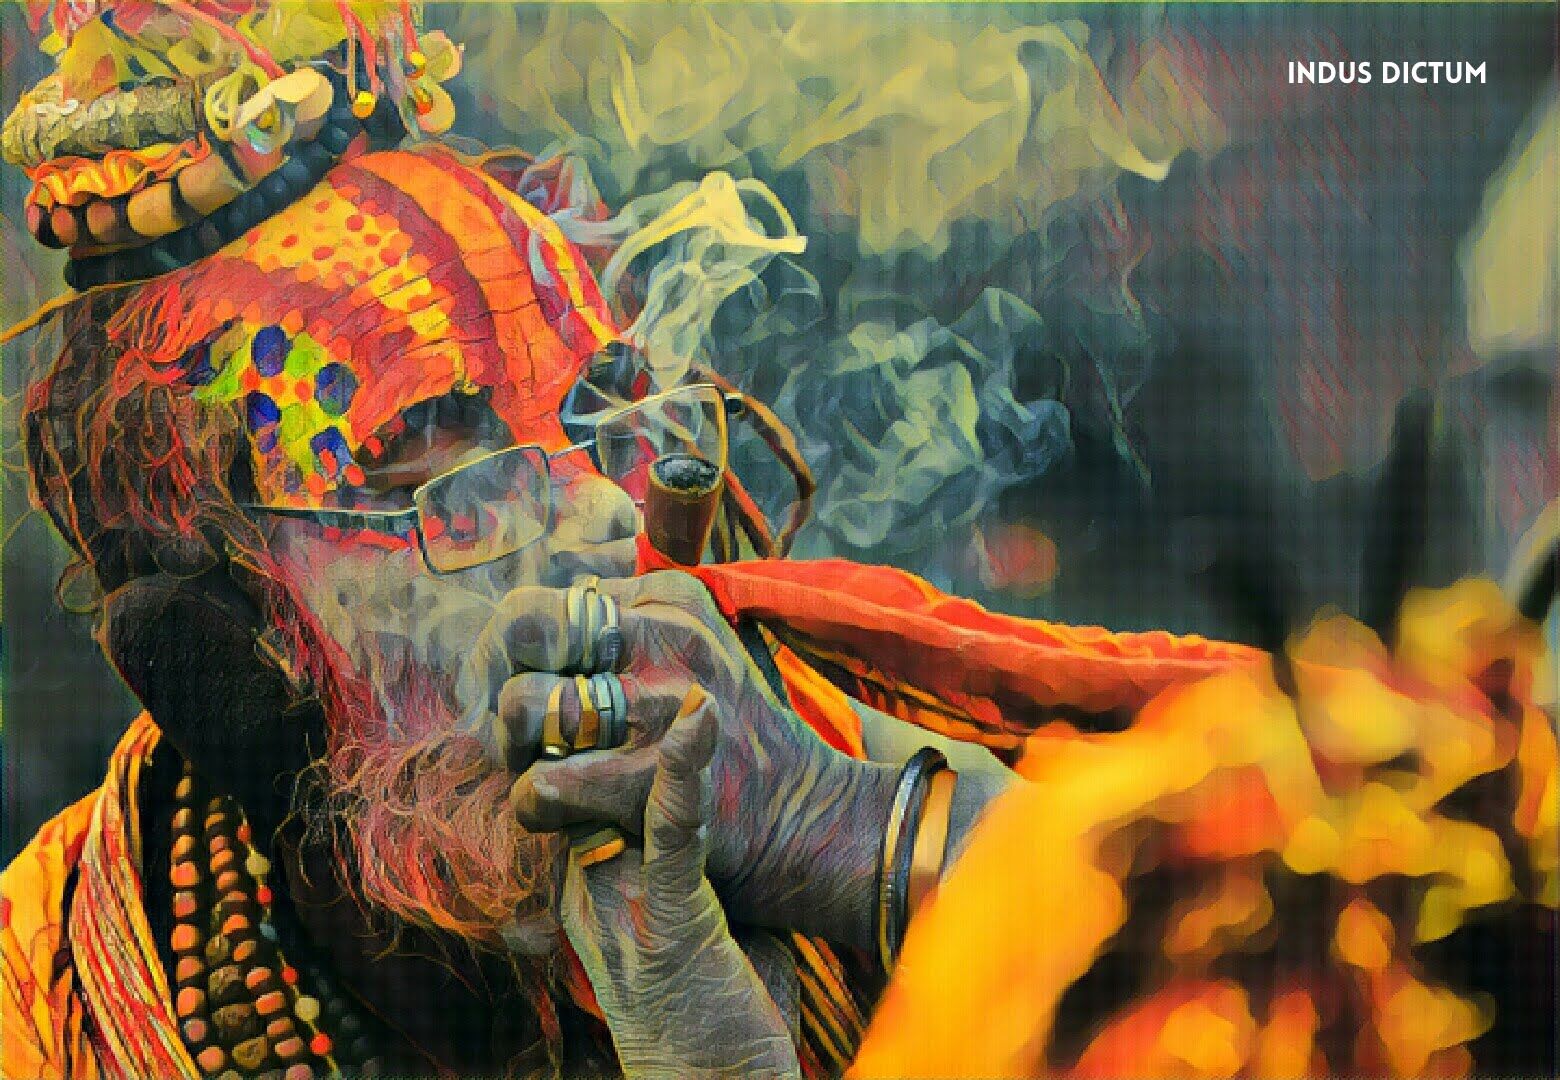 Sadhu smoking cannabis (marijuana) out of a chillum during Kumbh Mela